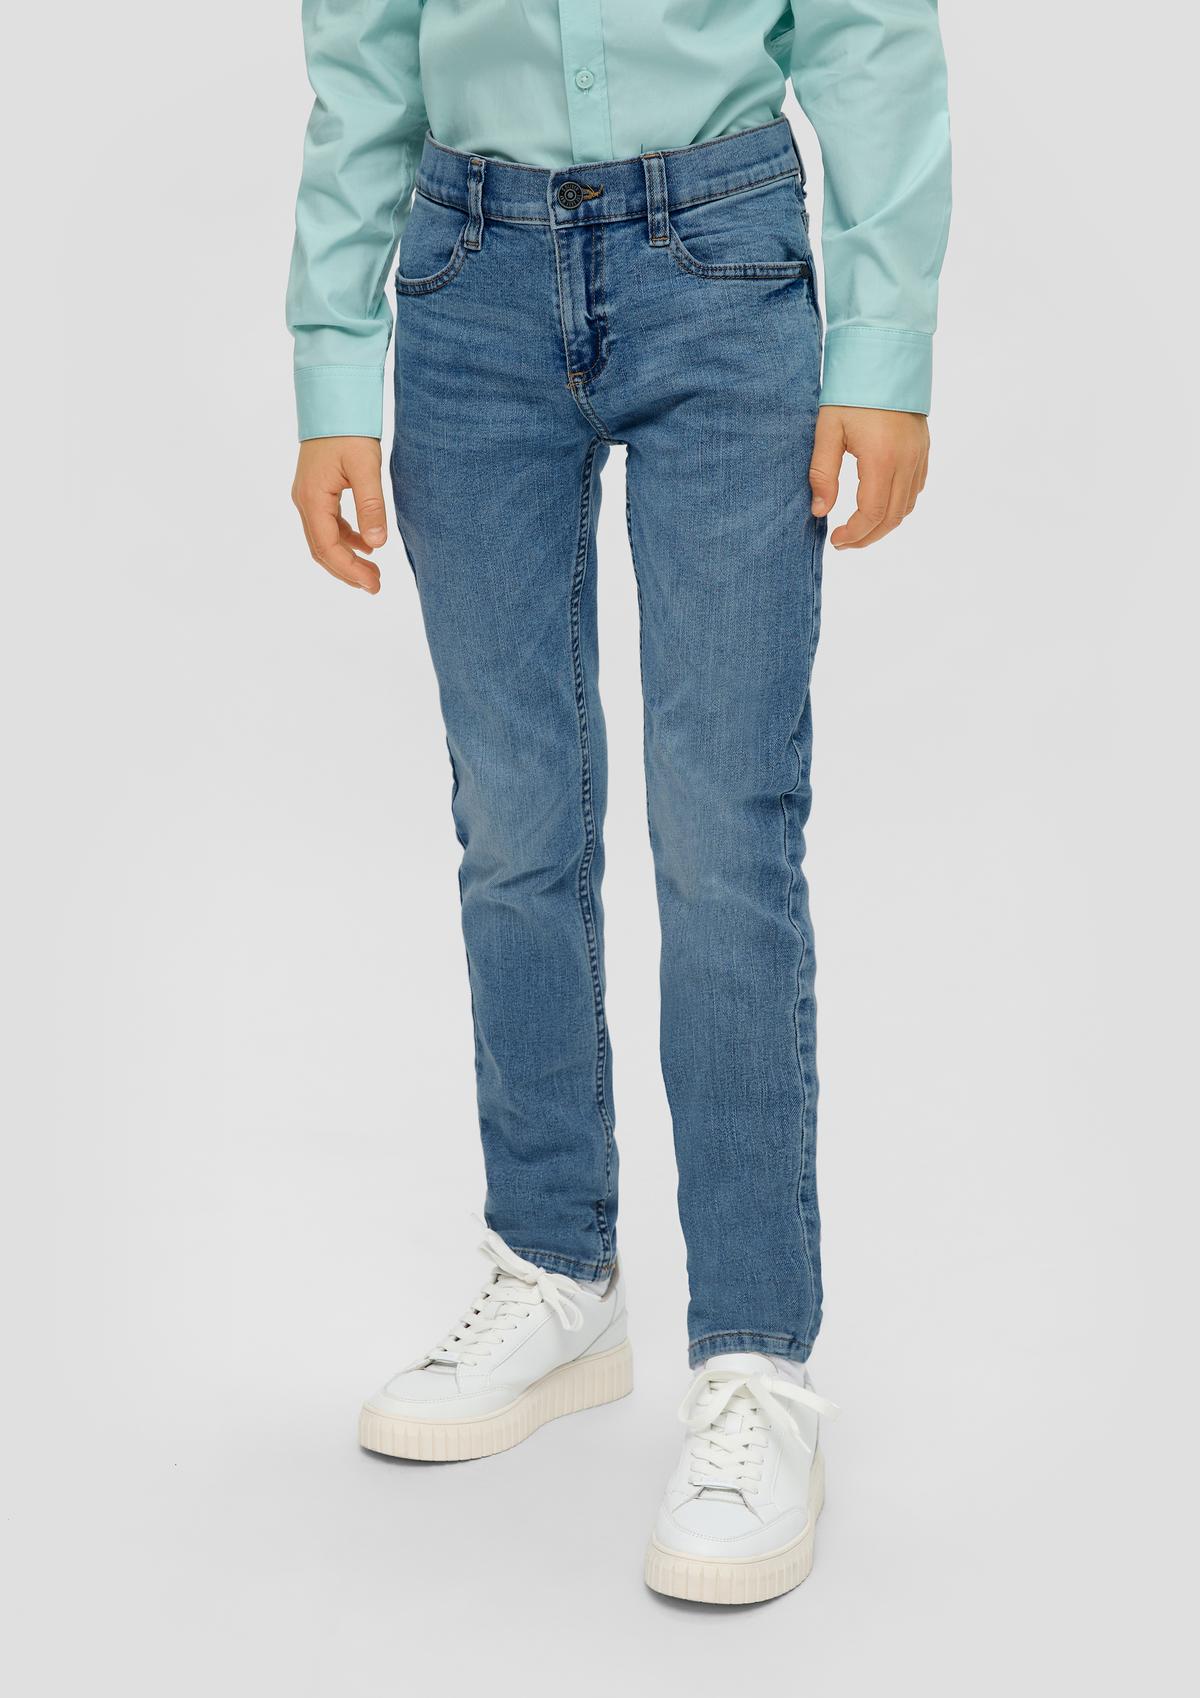 s.Oliver Jeans Seattle / Regular Fit / Mid Rise / Slim Leg